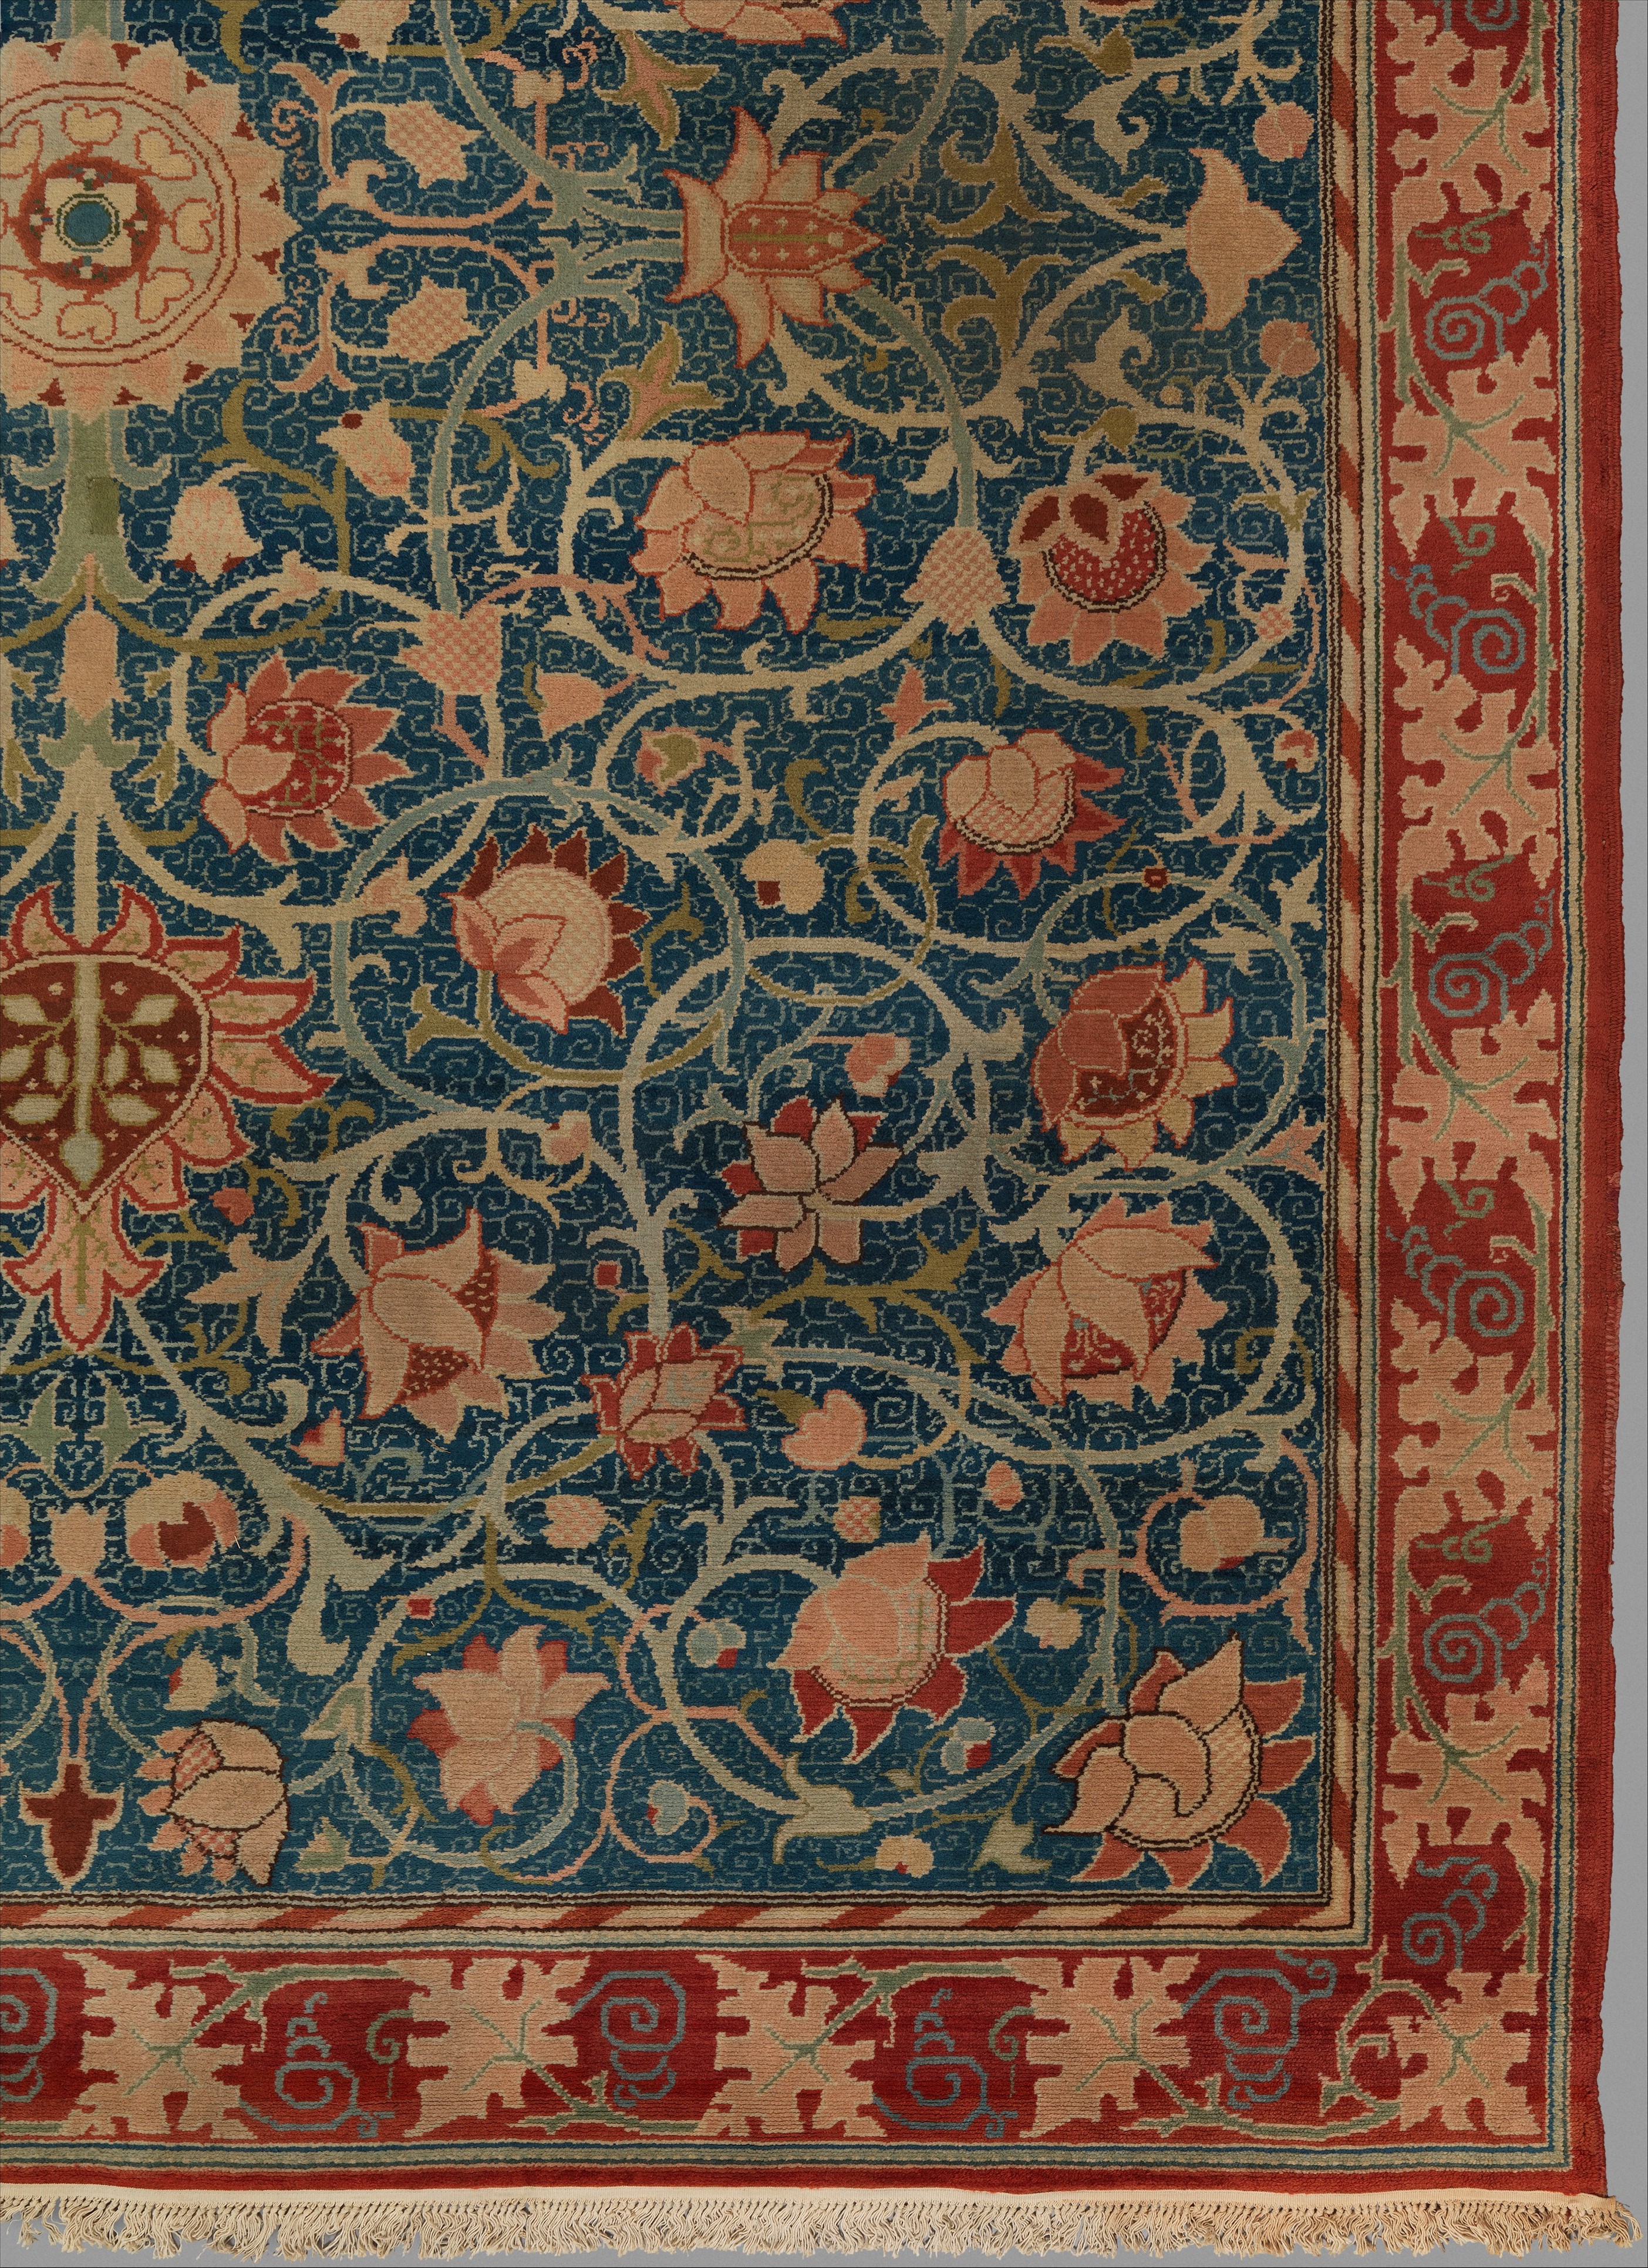 Holland Park Carpet by William Morris